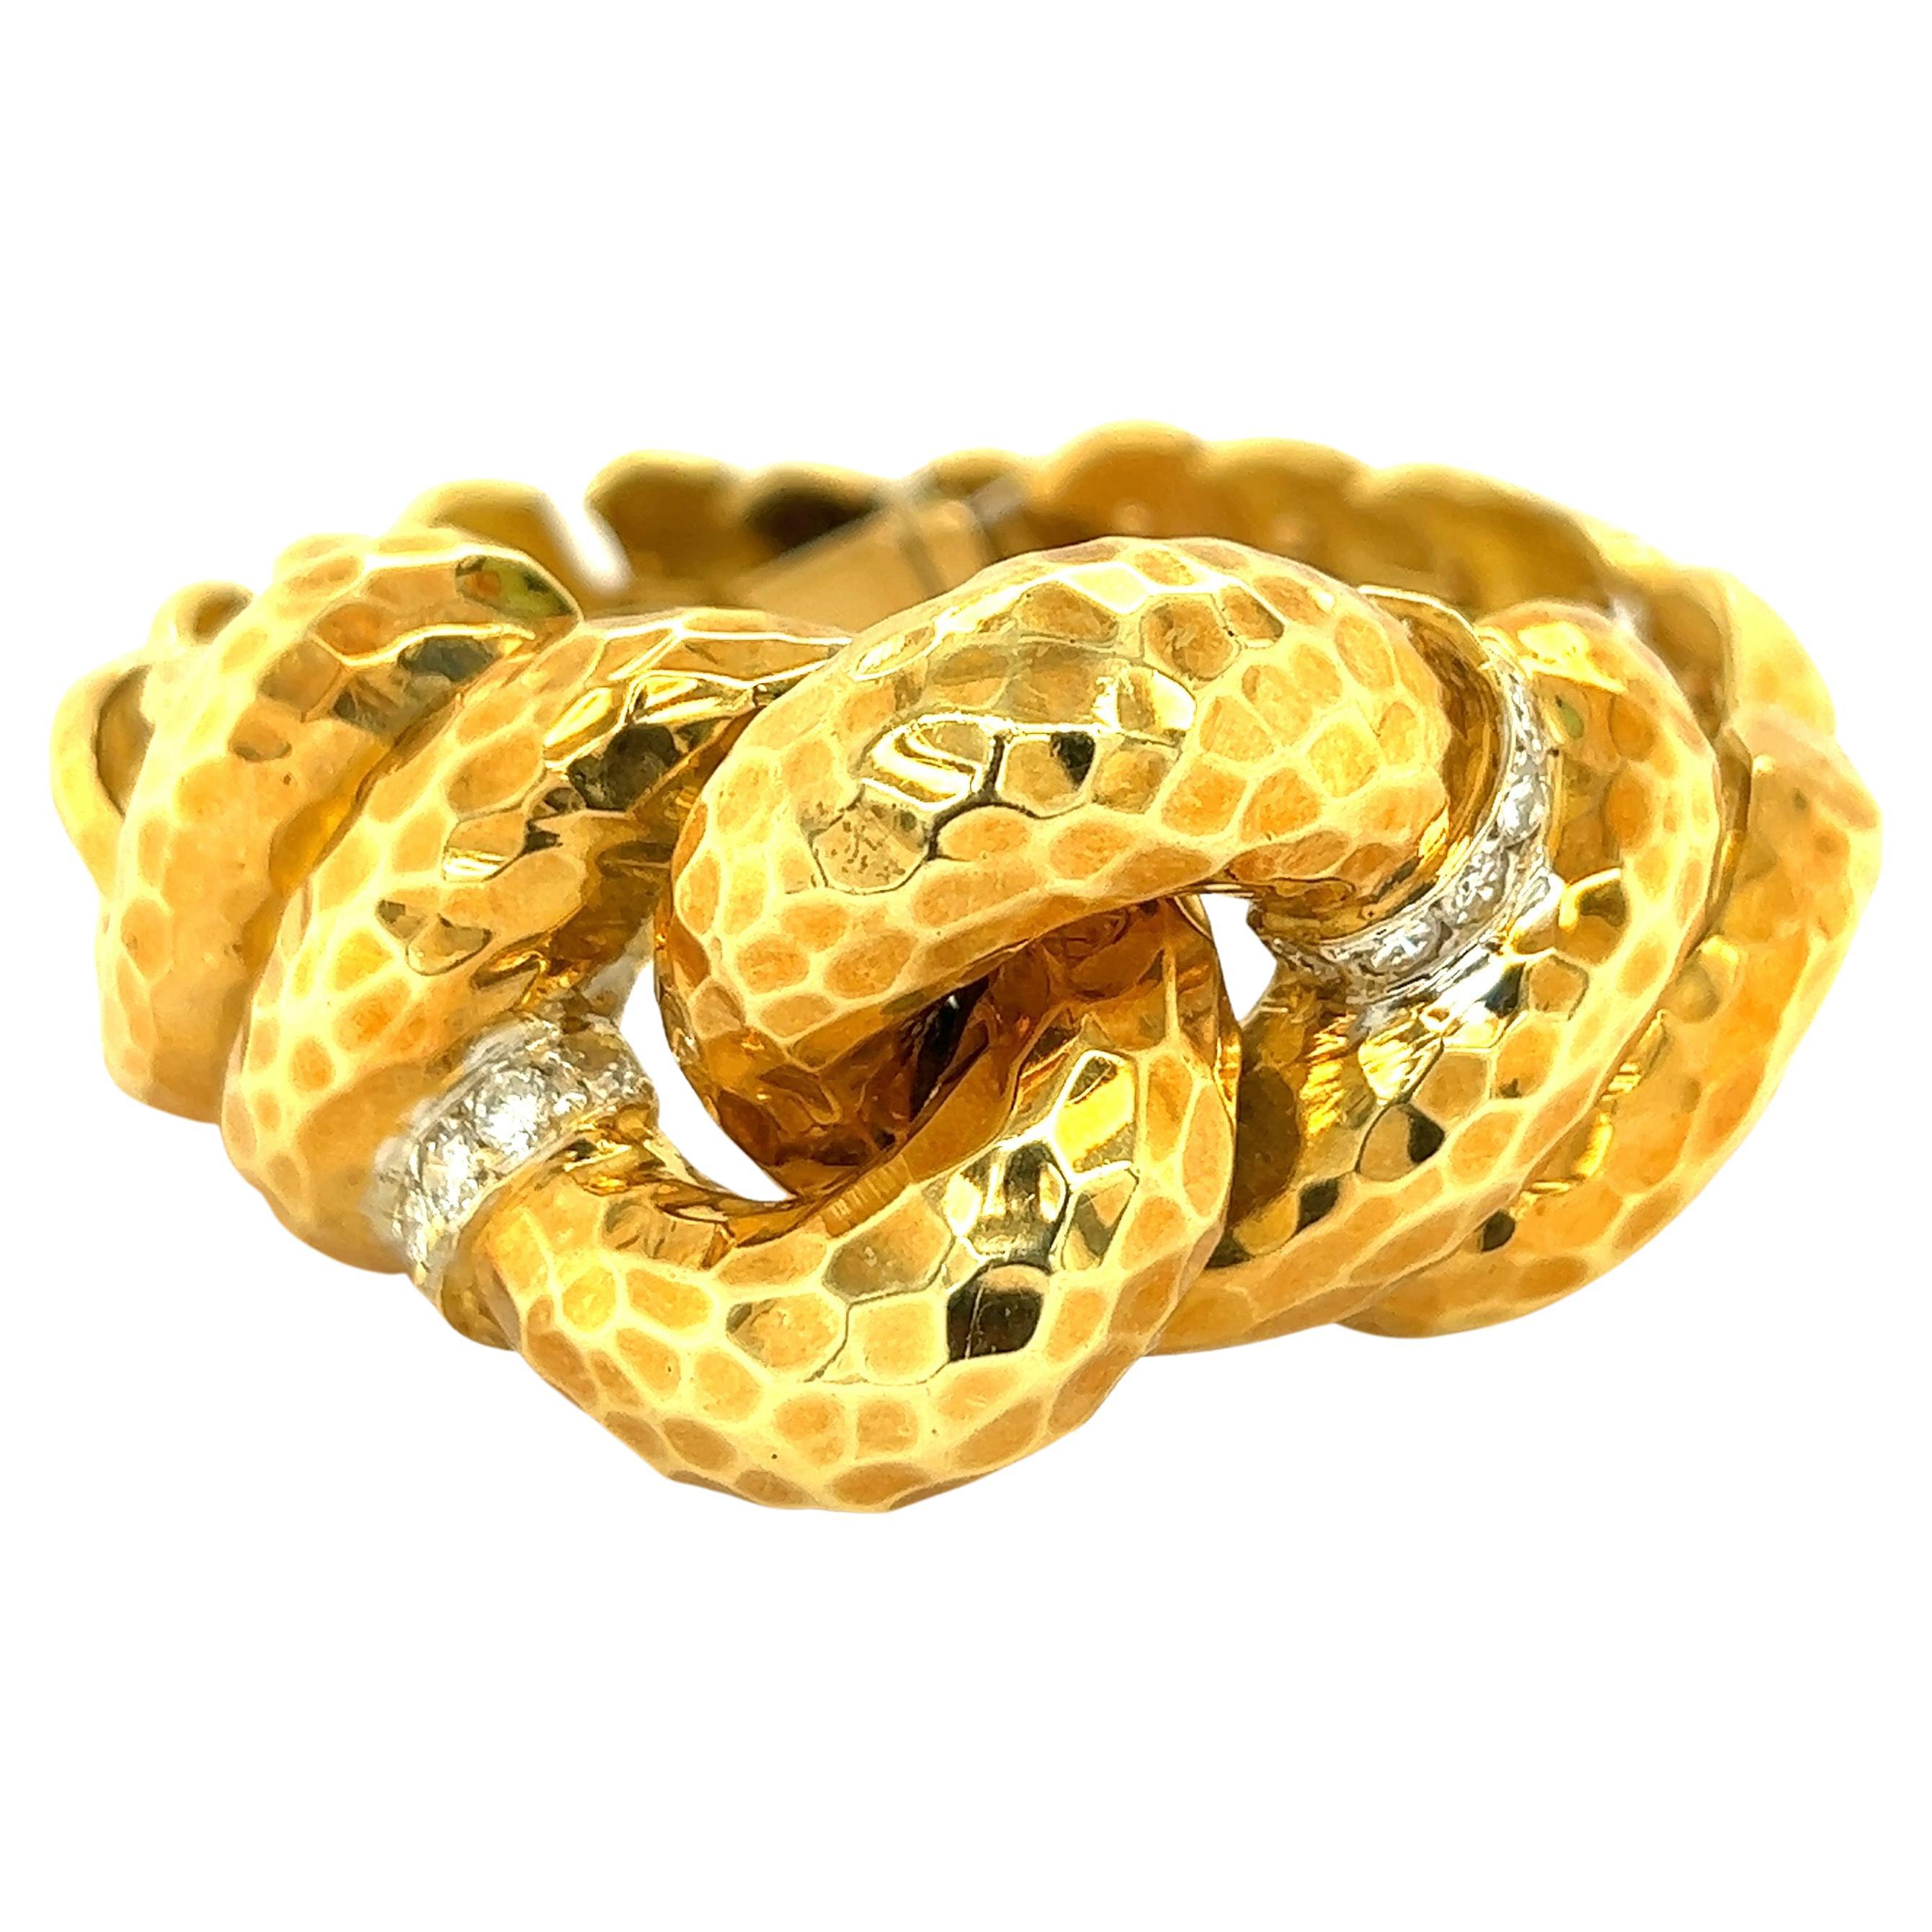 David Stern 18k Hammered Yellow Gold Diamond Bracelet 